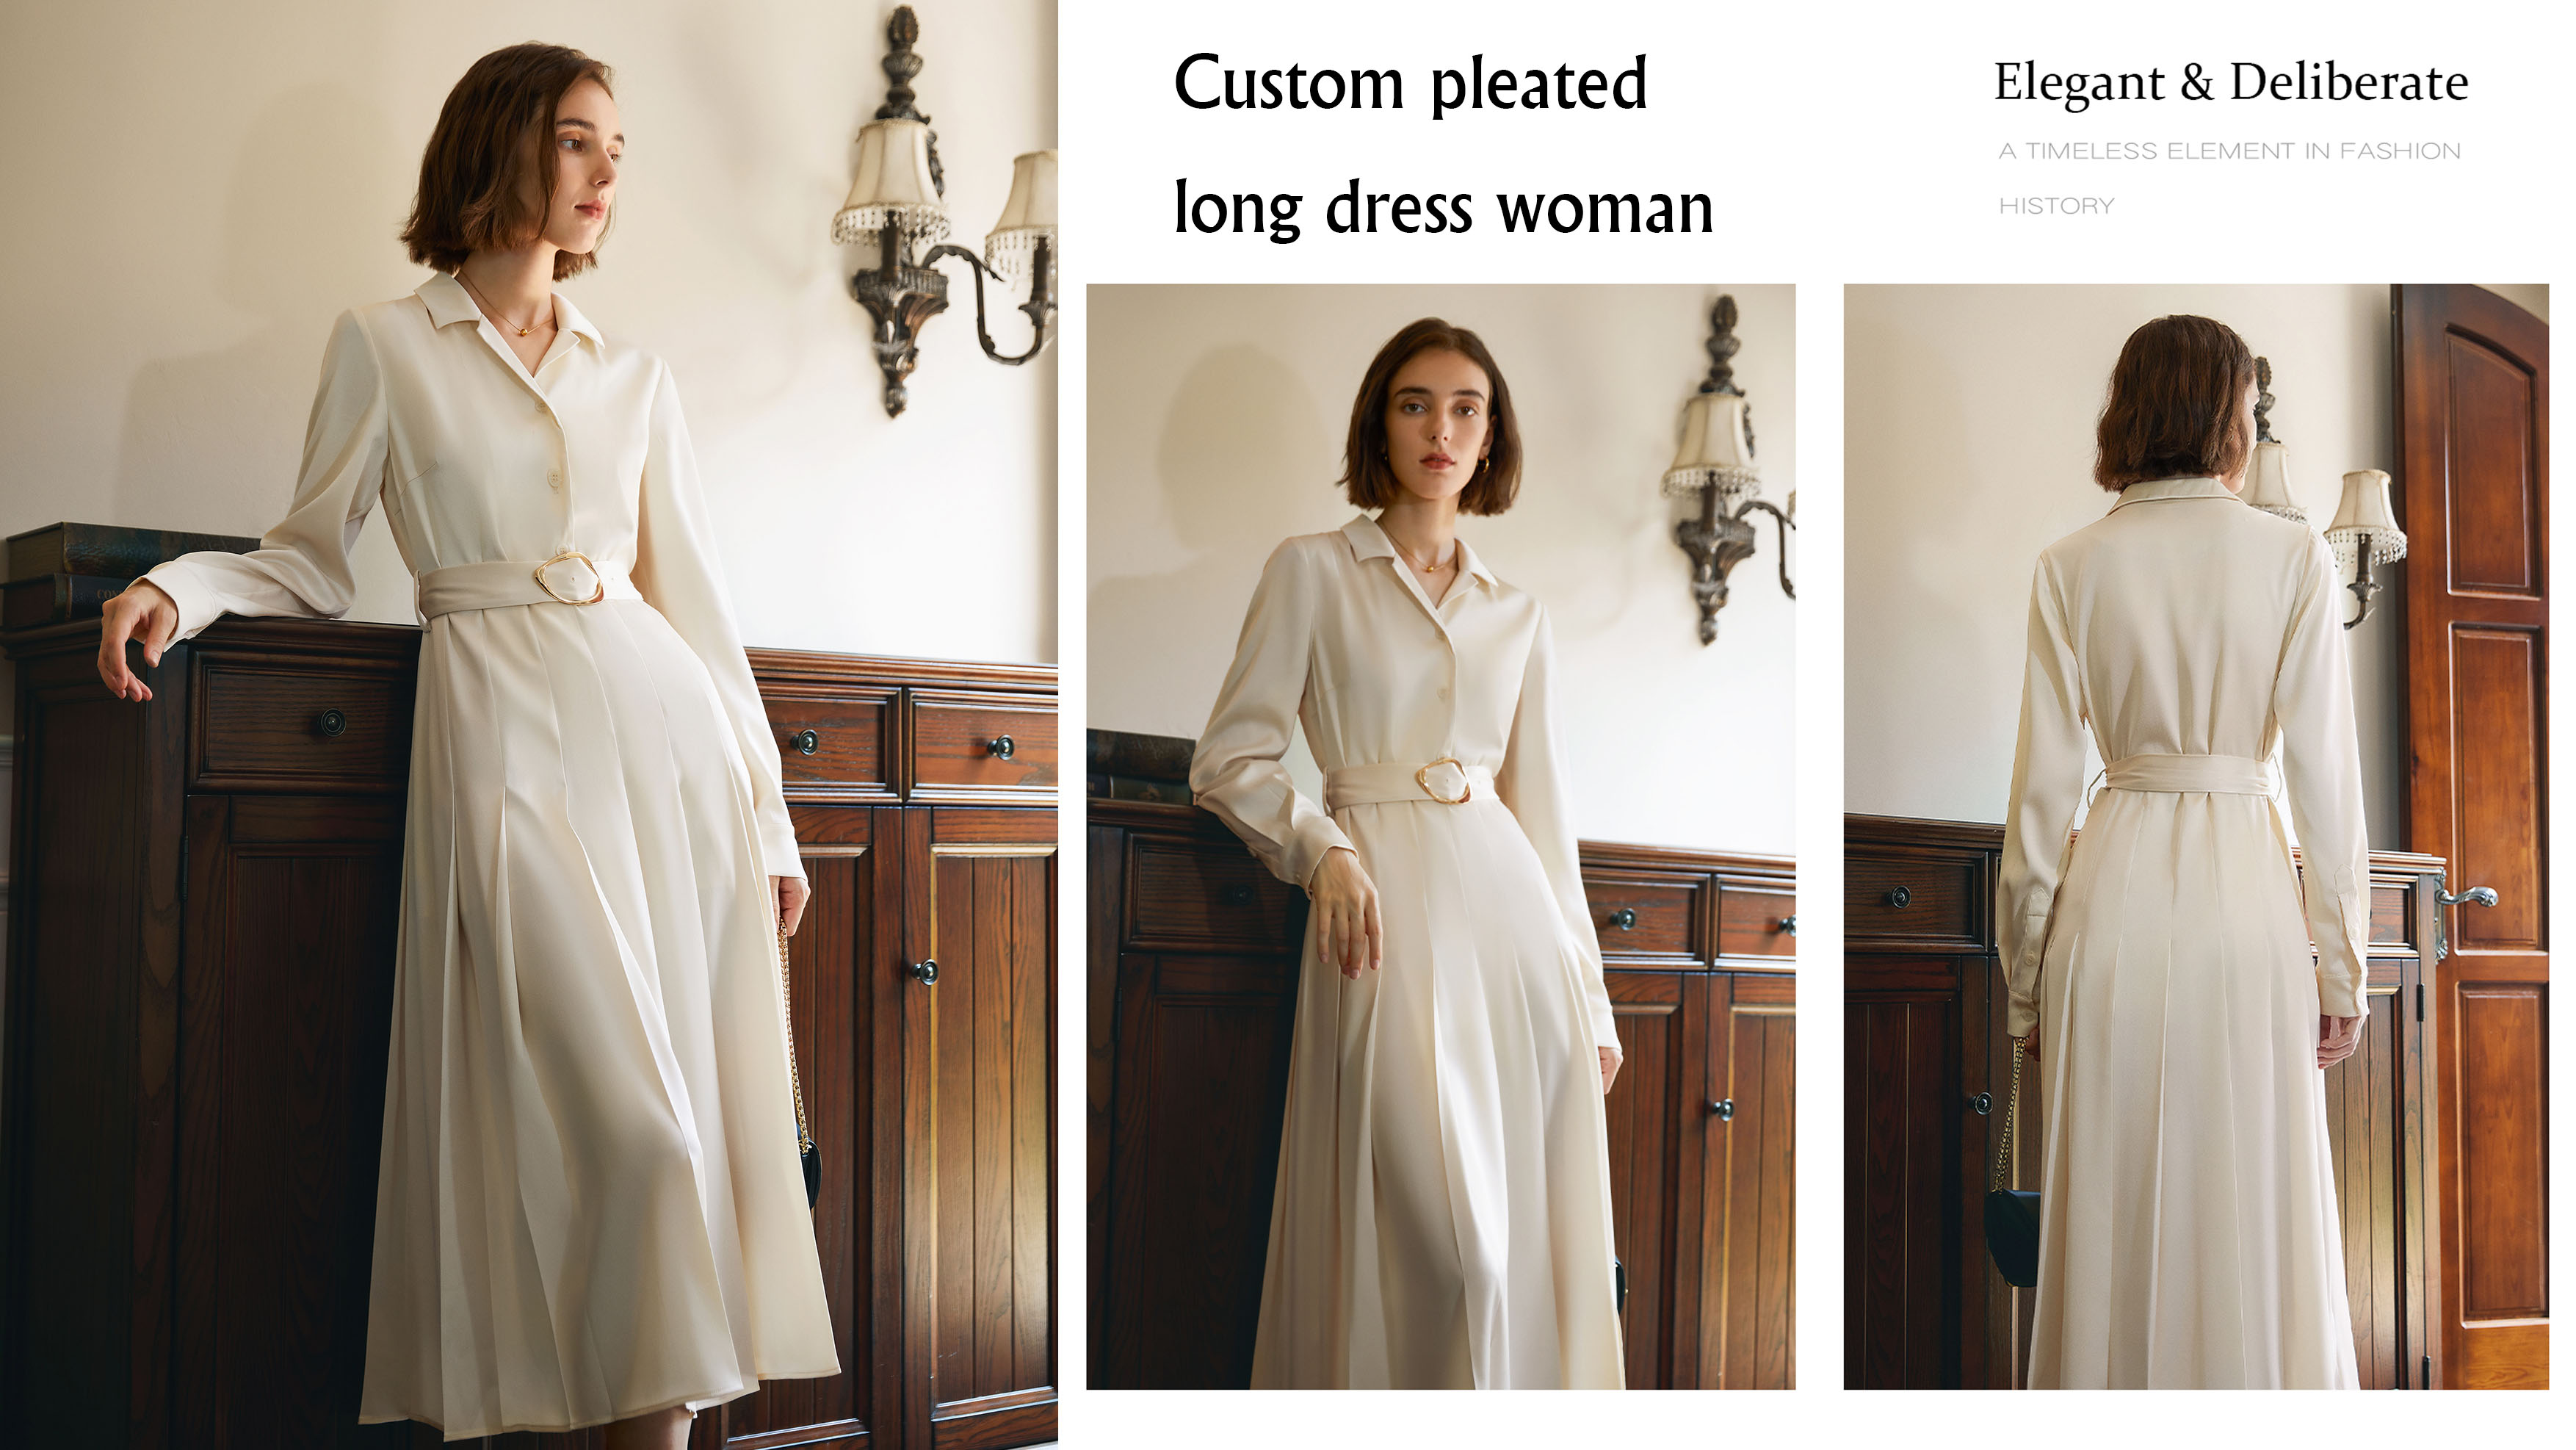 Custom pleated long dress woman